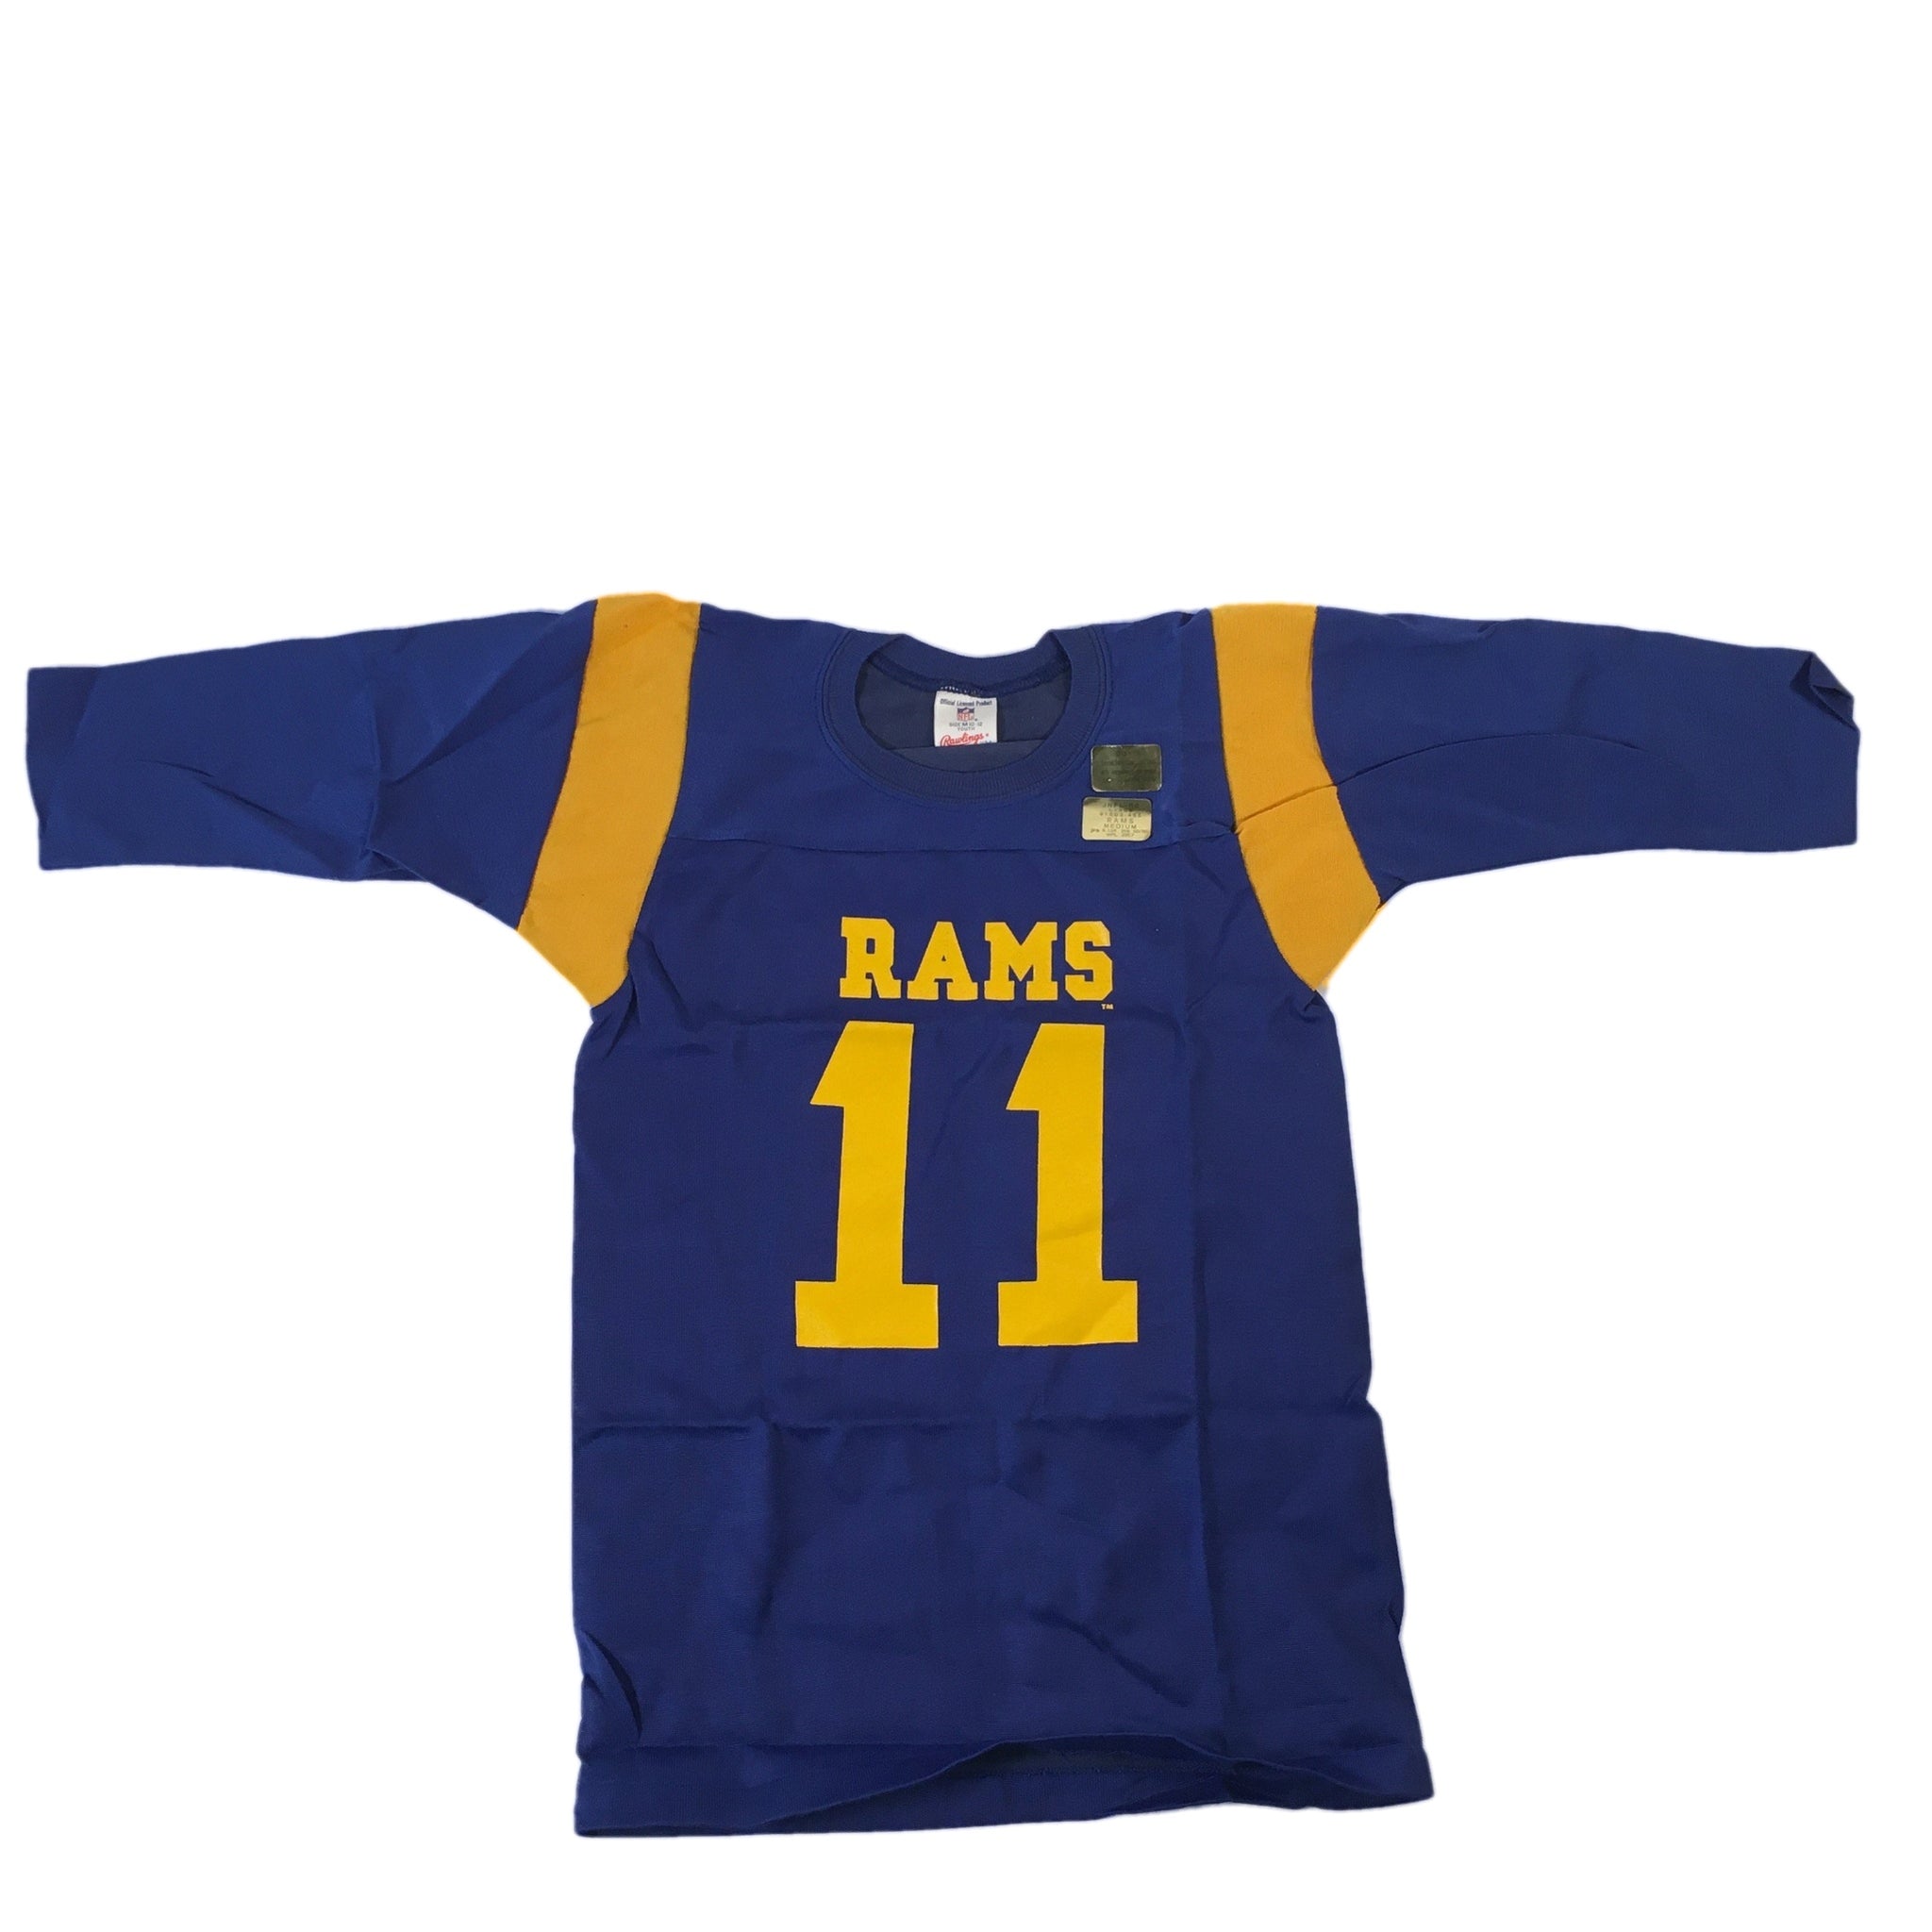 Los Angeles Rams Shirt - Retro California Football Apparel Men